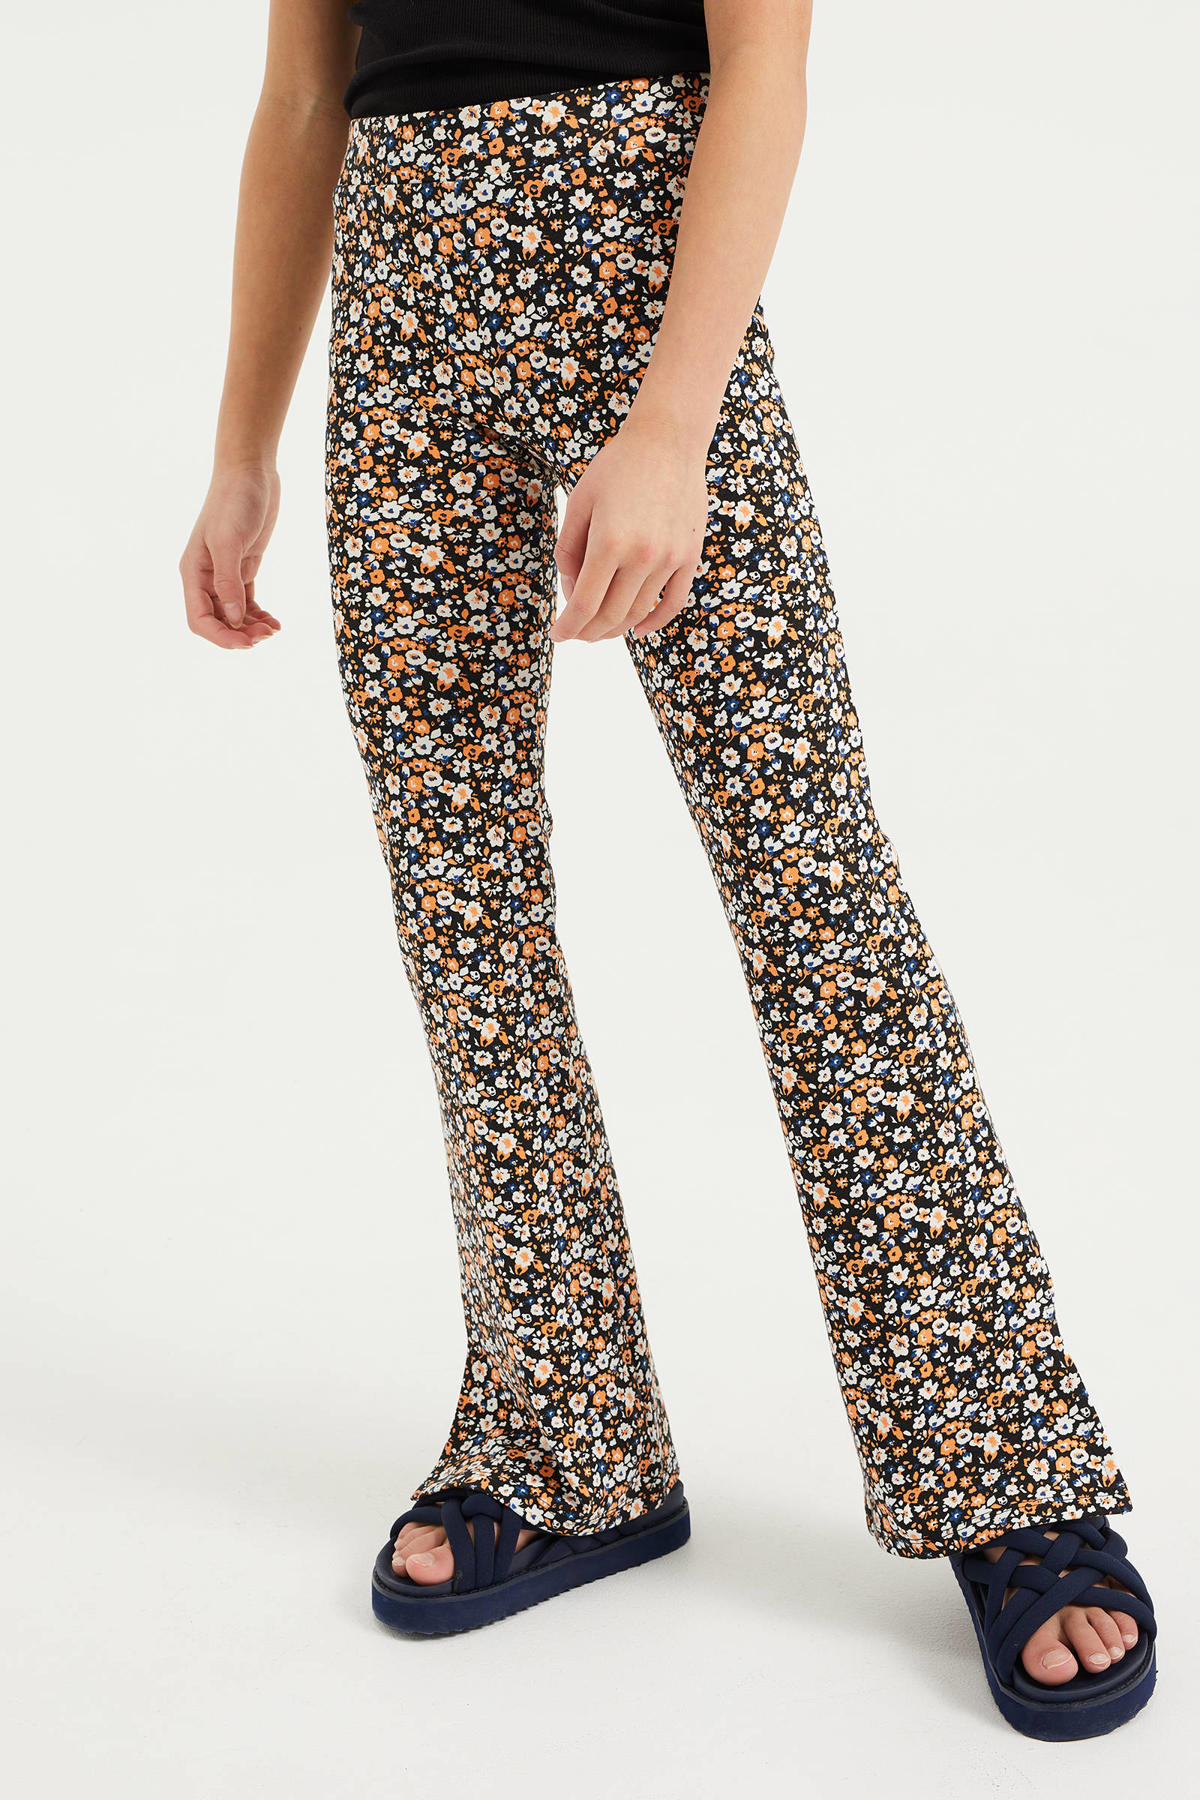 Permanent slikken Dierbare WE Fashion flared broek met all over print zwart/oranje/blauw | wehkamp